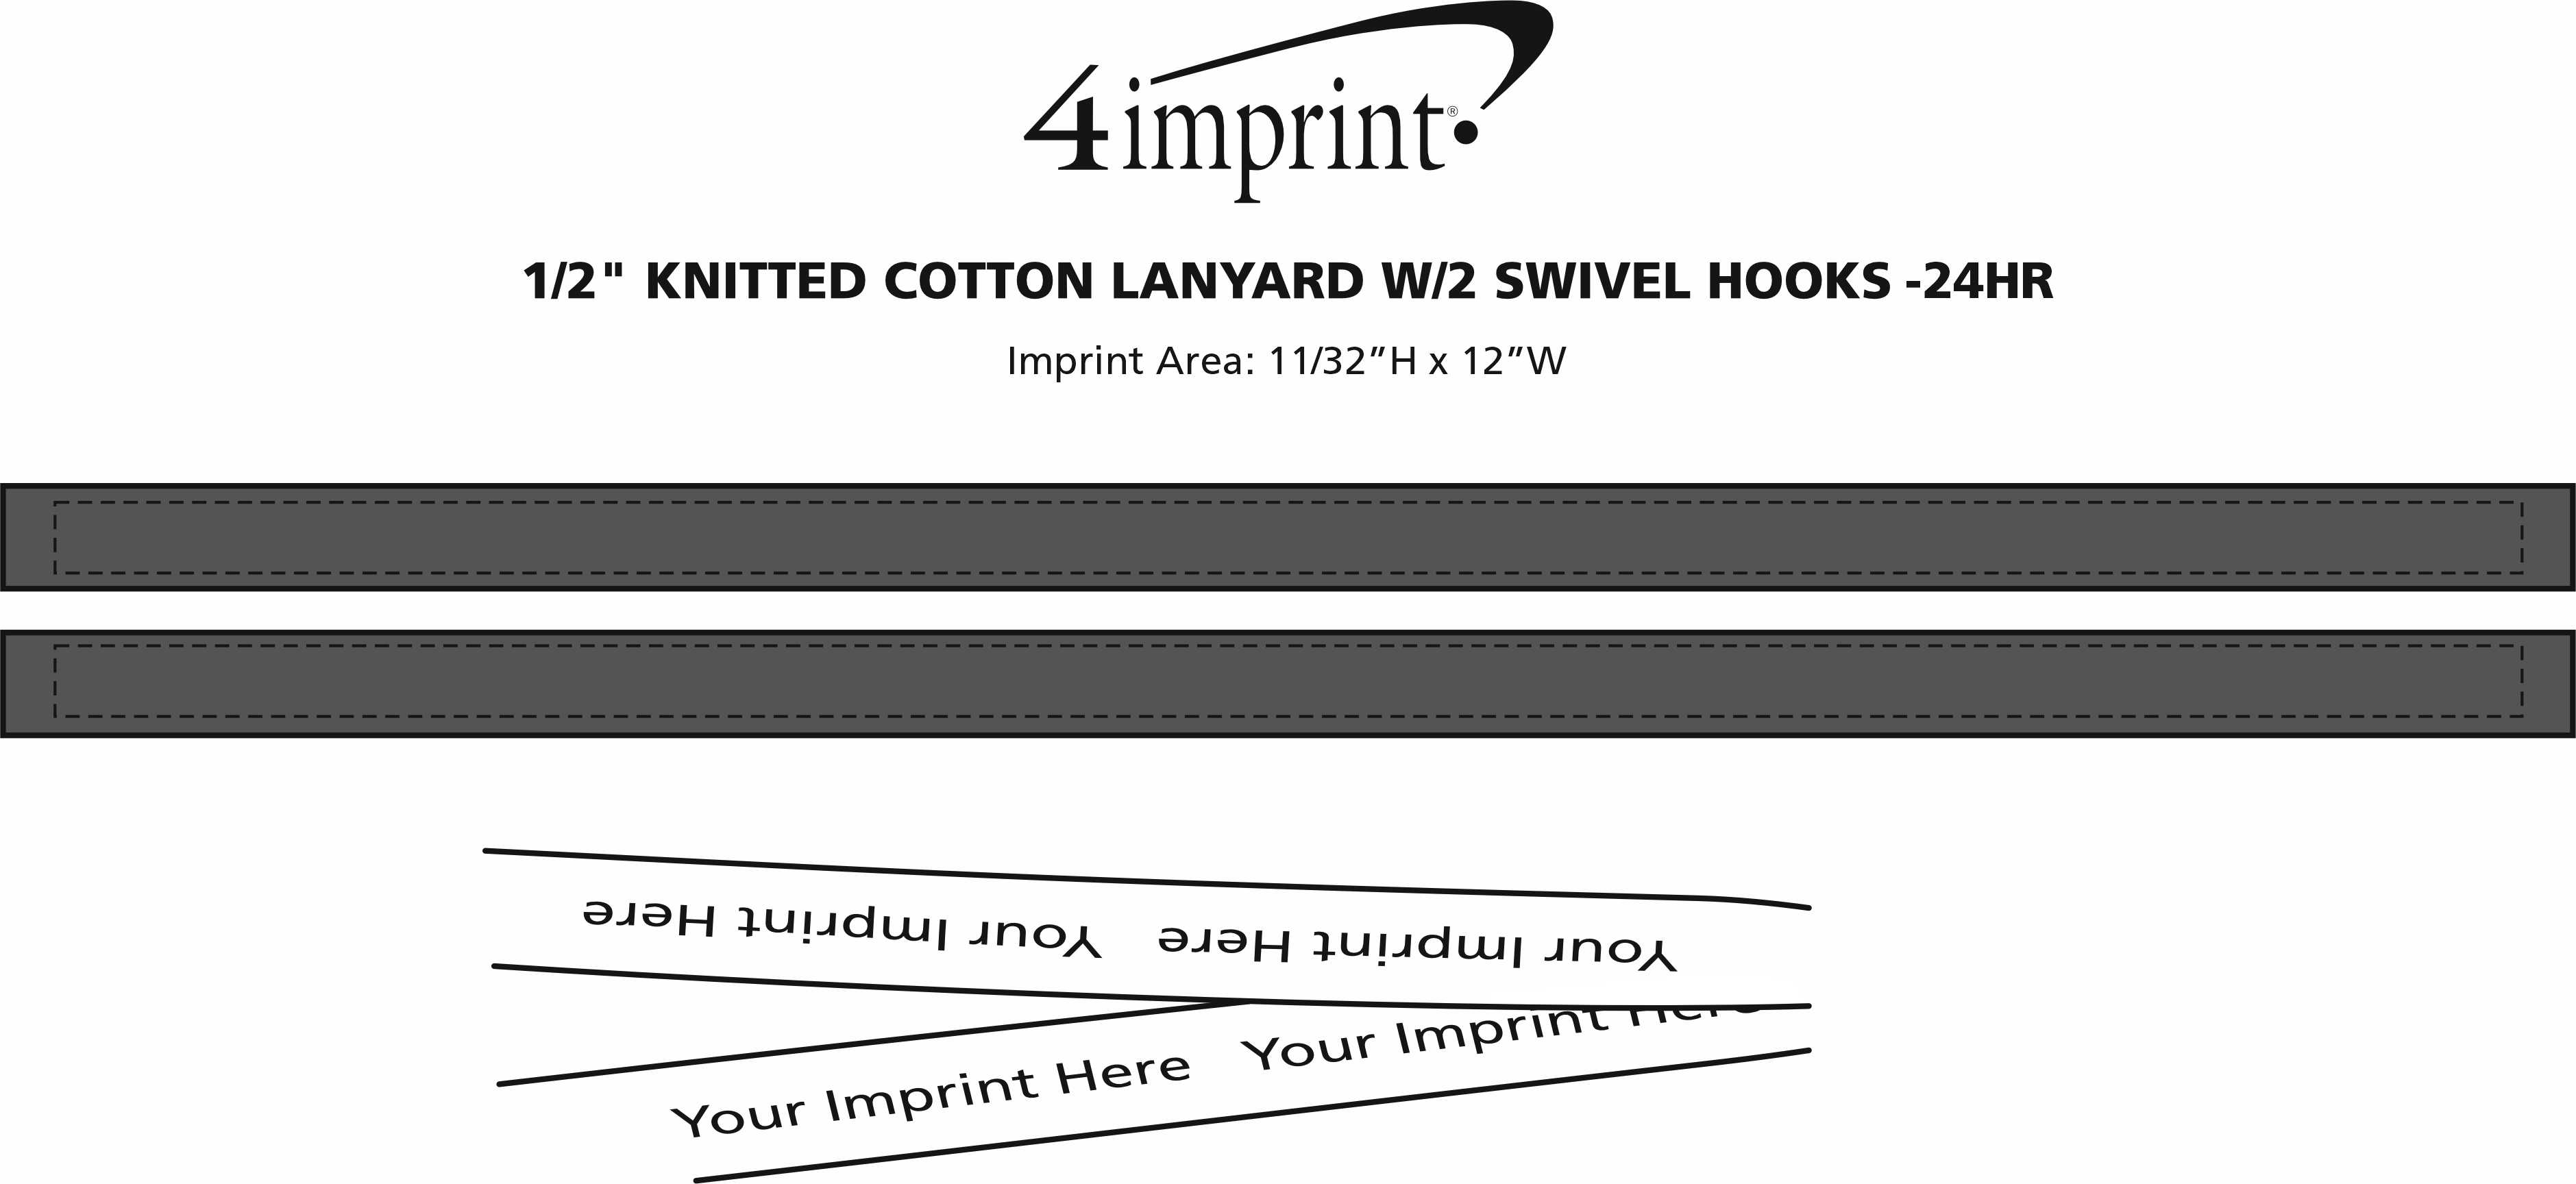 Imprint Area of Knit Cotton Lanyard - 5/8" - 2 Swivel Hooks - 24 hr